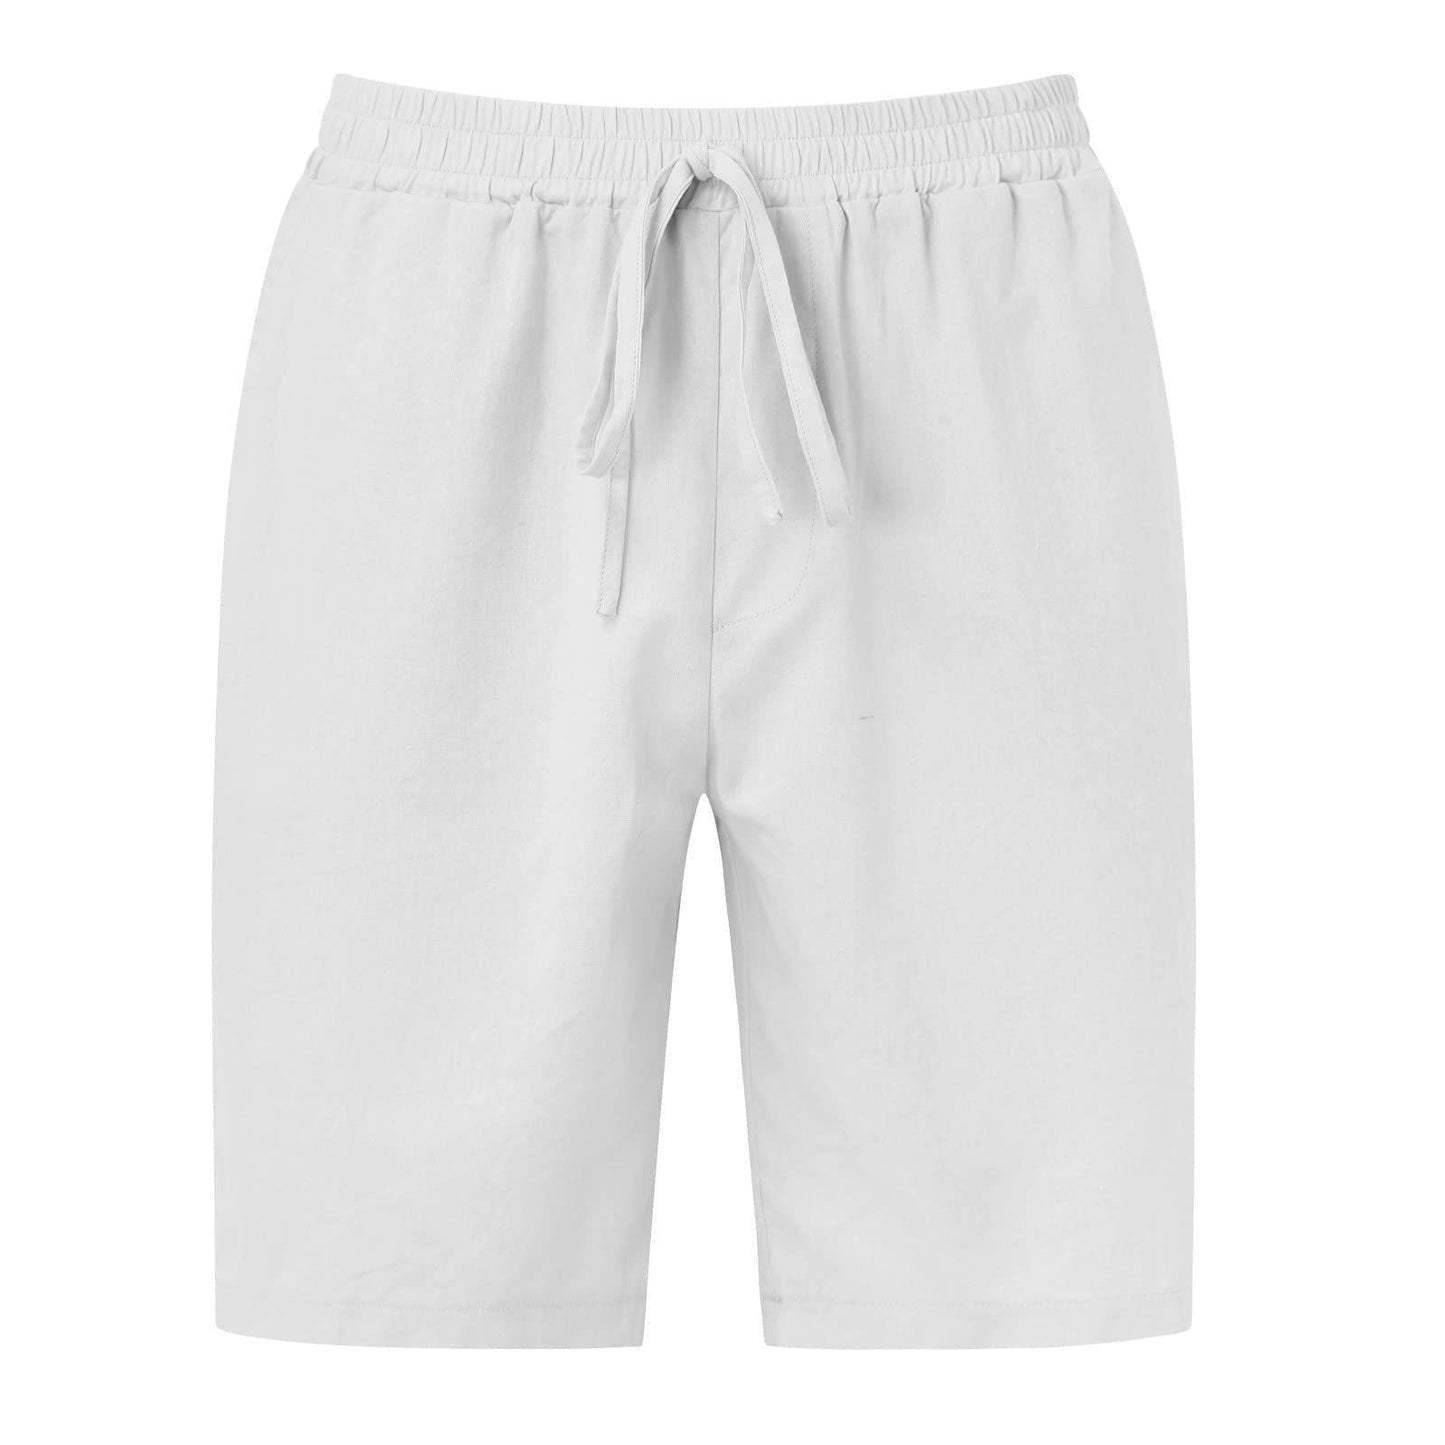 Men's 2 Piece Linen Sets Short Sleeve Button Up Shirt and Shorts Summer Casual Beach Outfits